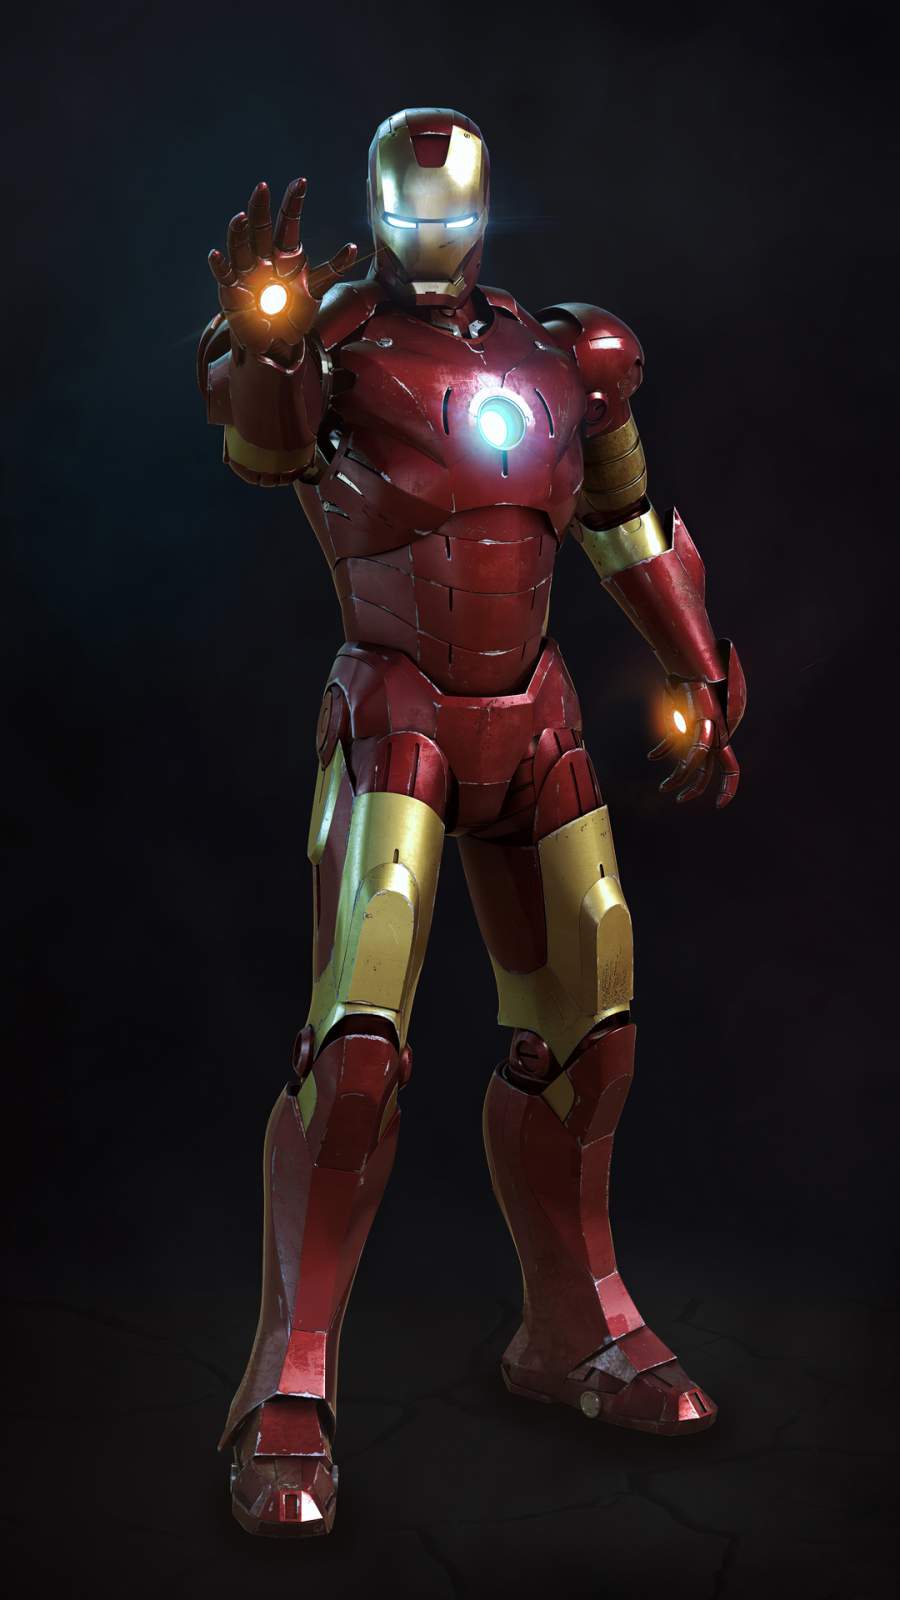 Iron Man 2020 Wallpapers